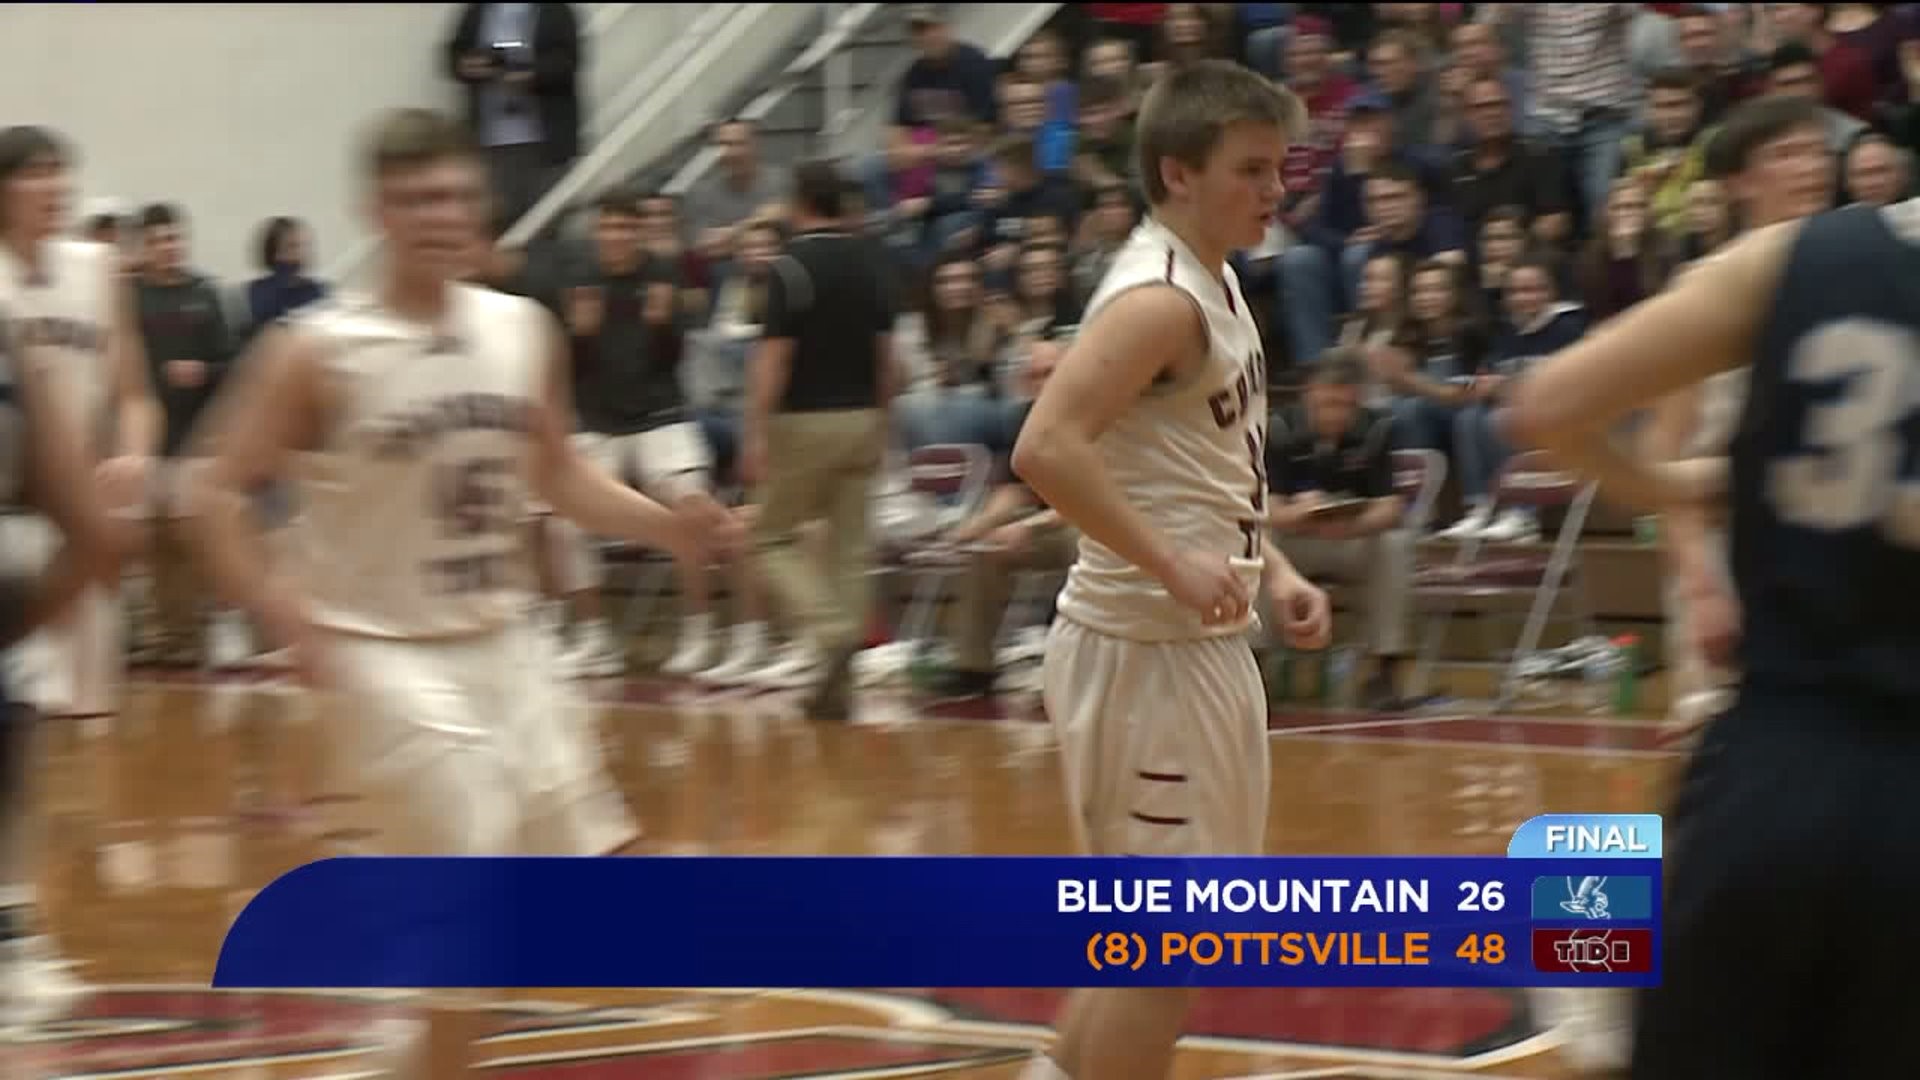 Pottsville vs Blue Mountain boys basketball